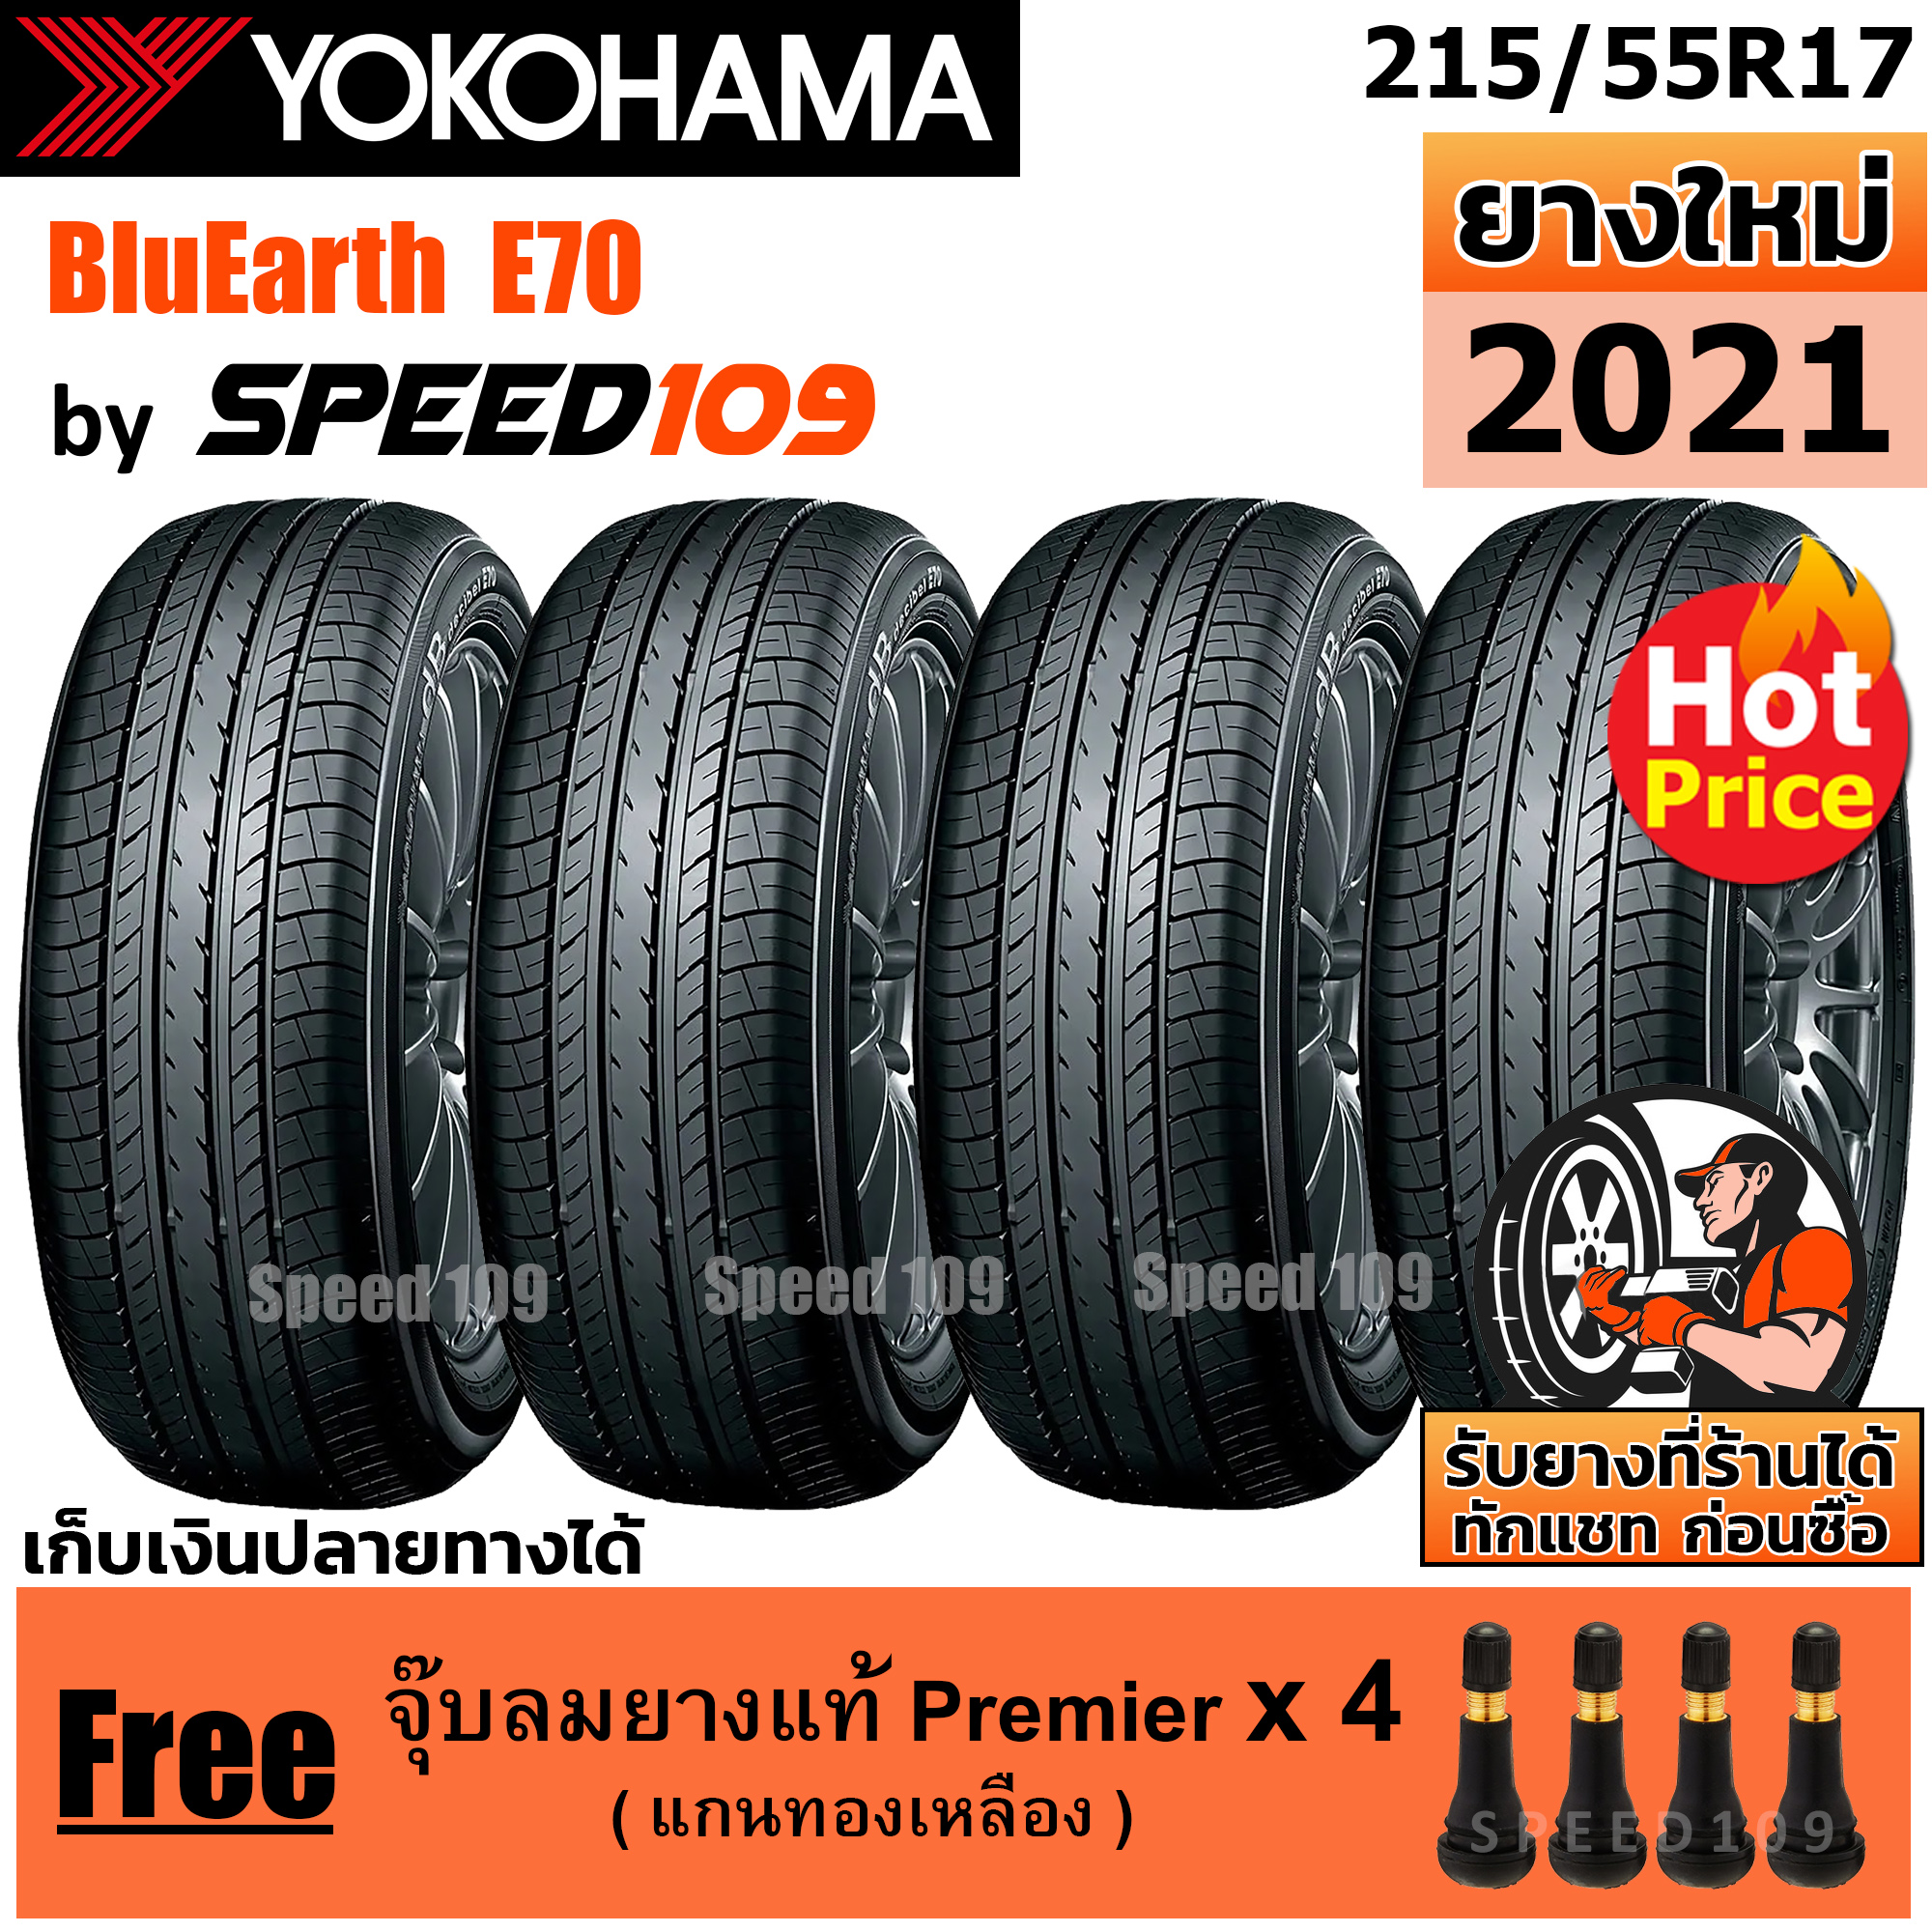 YOKOHAMA ยางรถยนต์ ขอบ 17 ขนาด 215/55R17 รุ่น BluEarth E70 - 4 เส้น (ปี 2021)